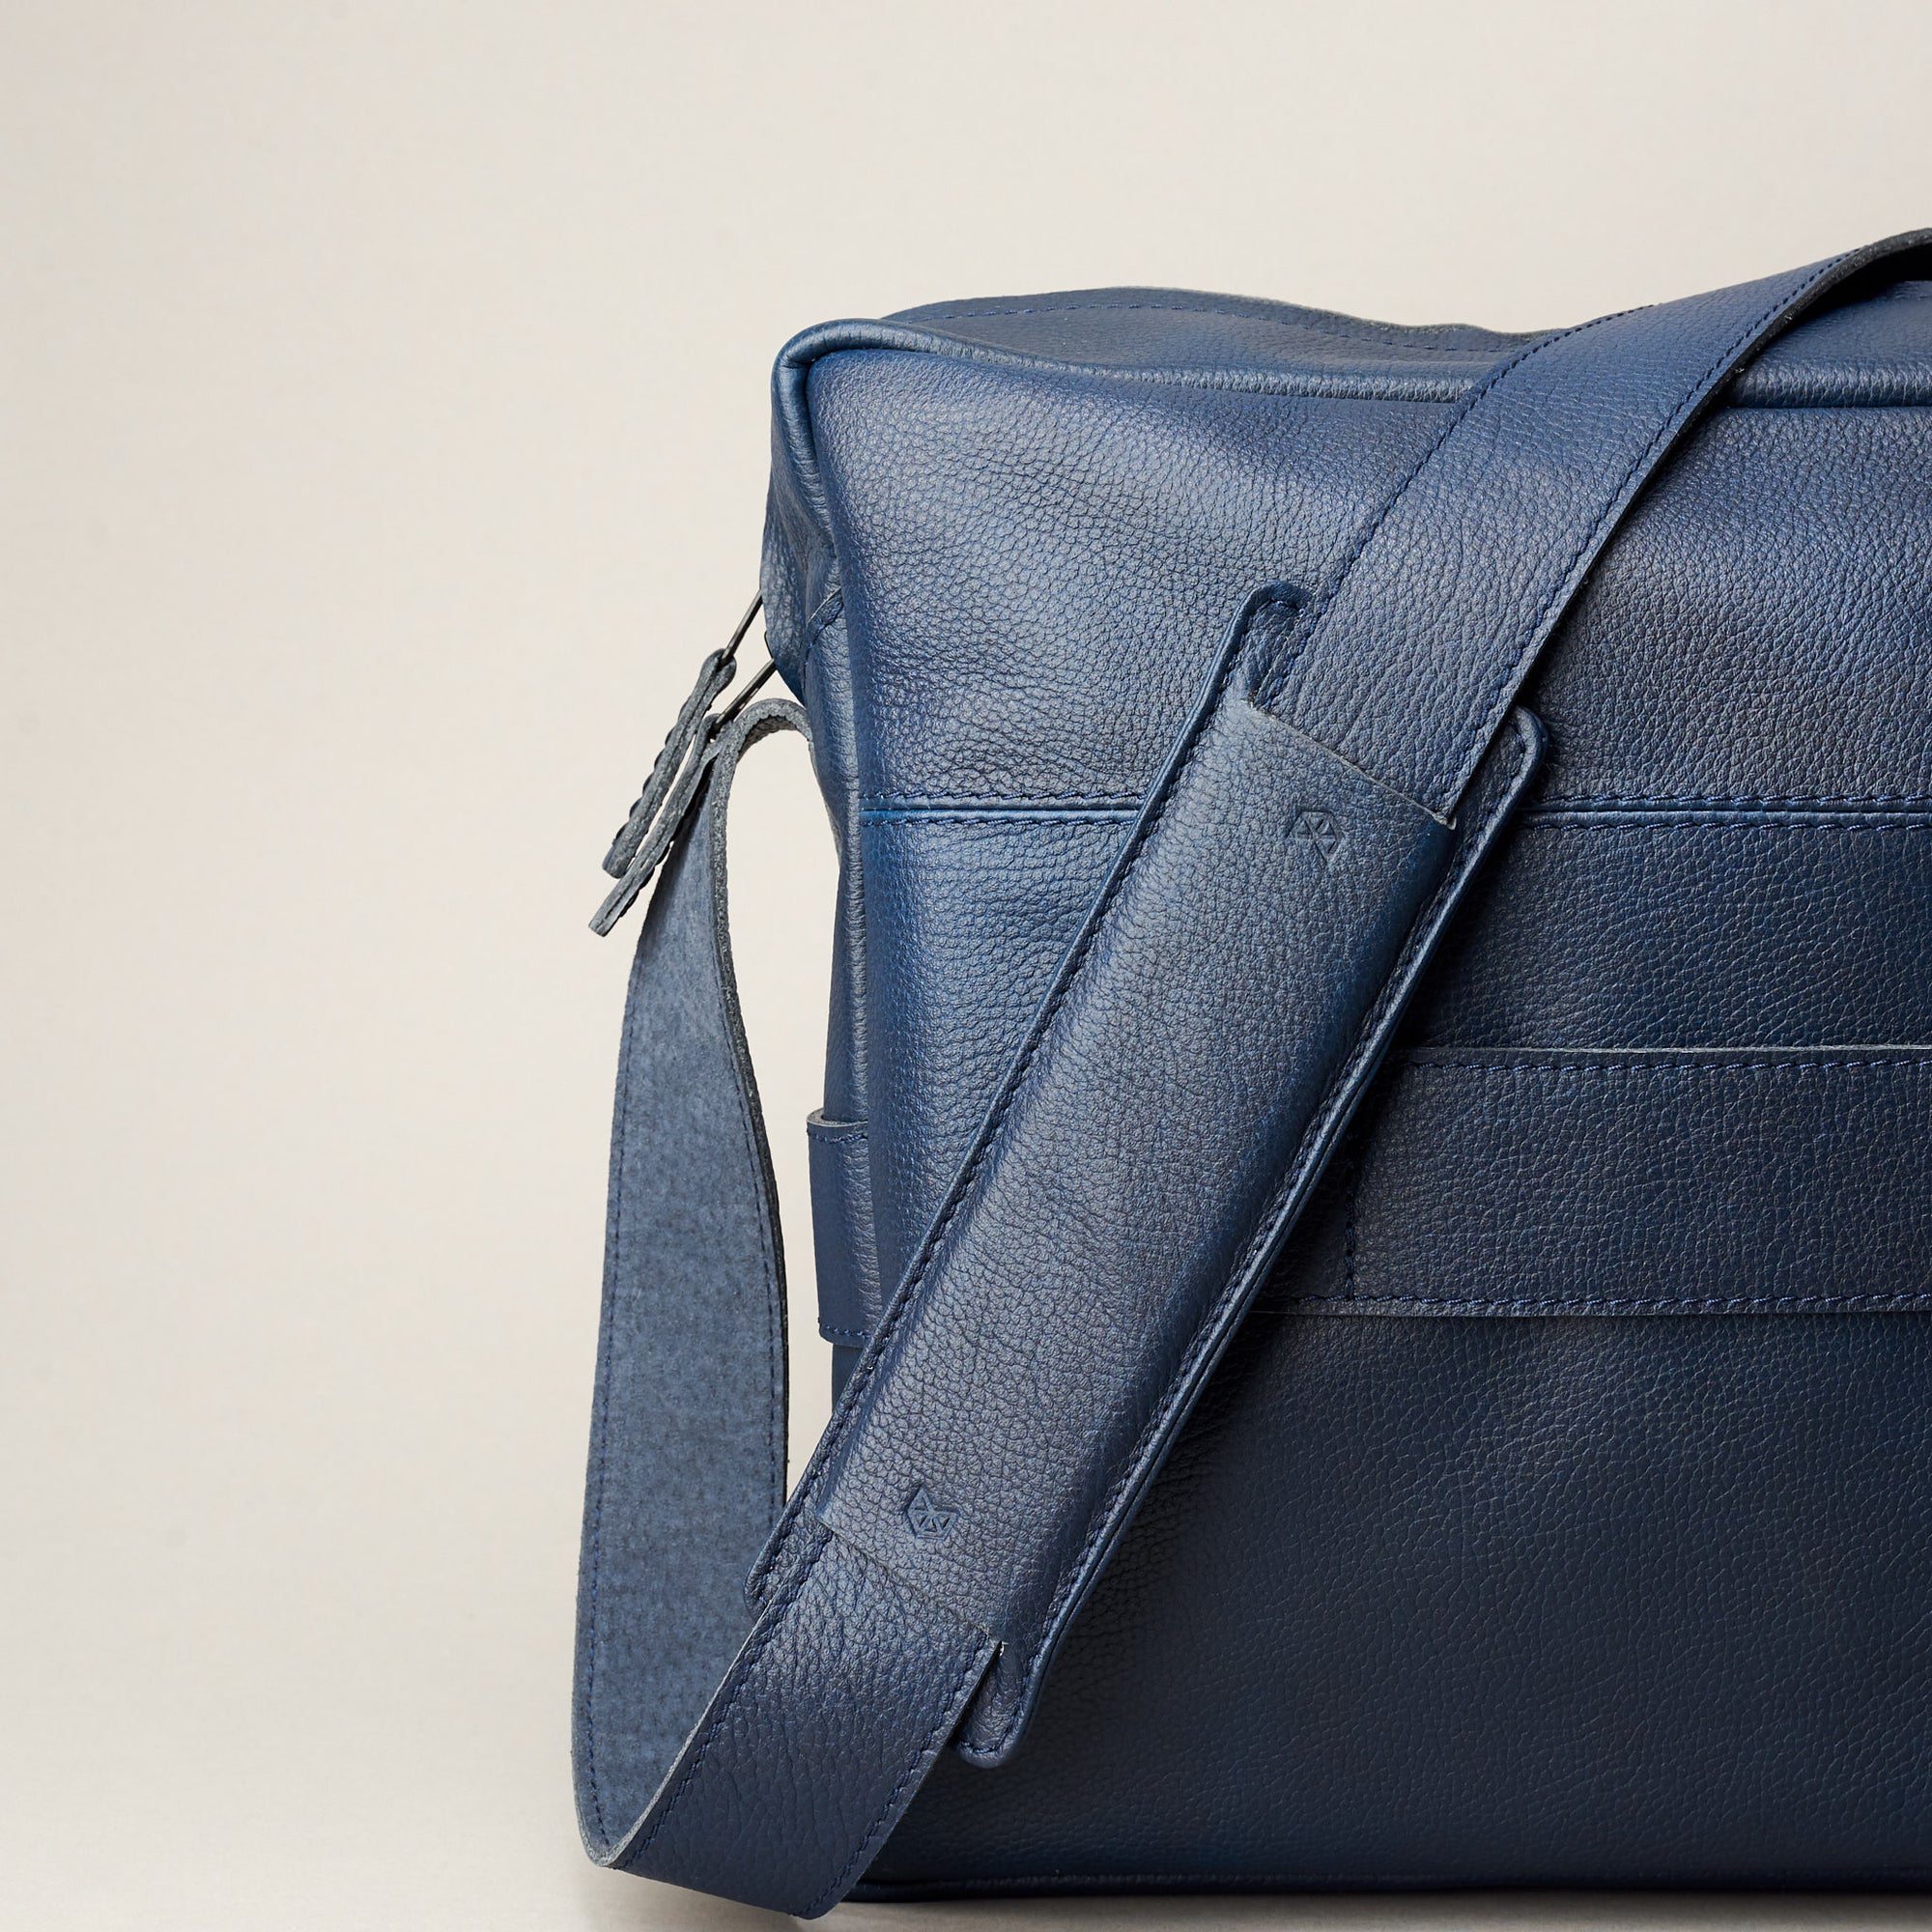 Strap detail. Addox Blue crossbody bag for Men by Capra Leather